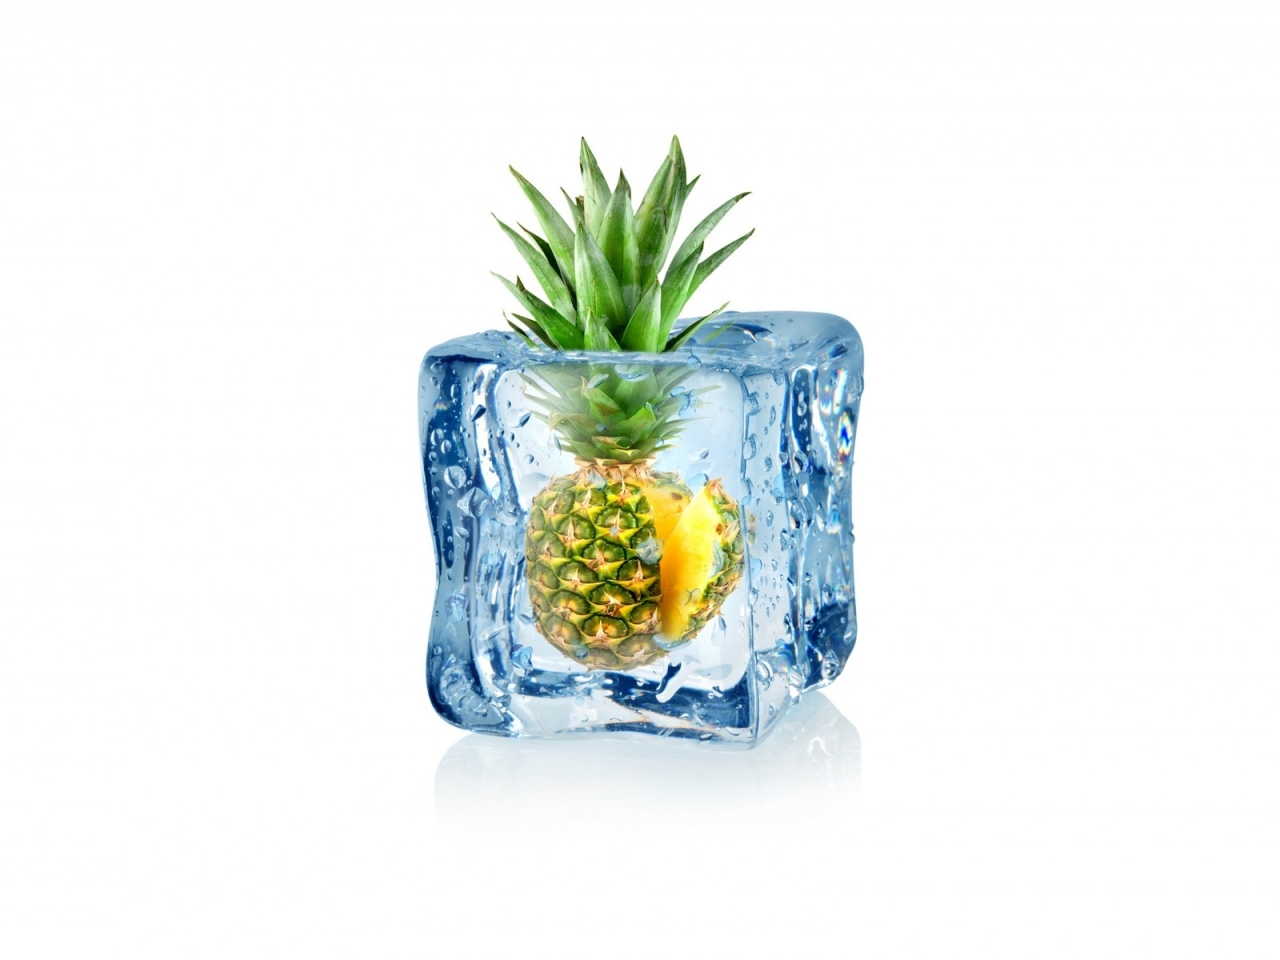 Frozen Pineapple for 1280 x 960 resolution